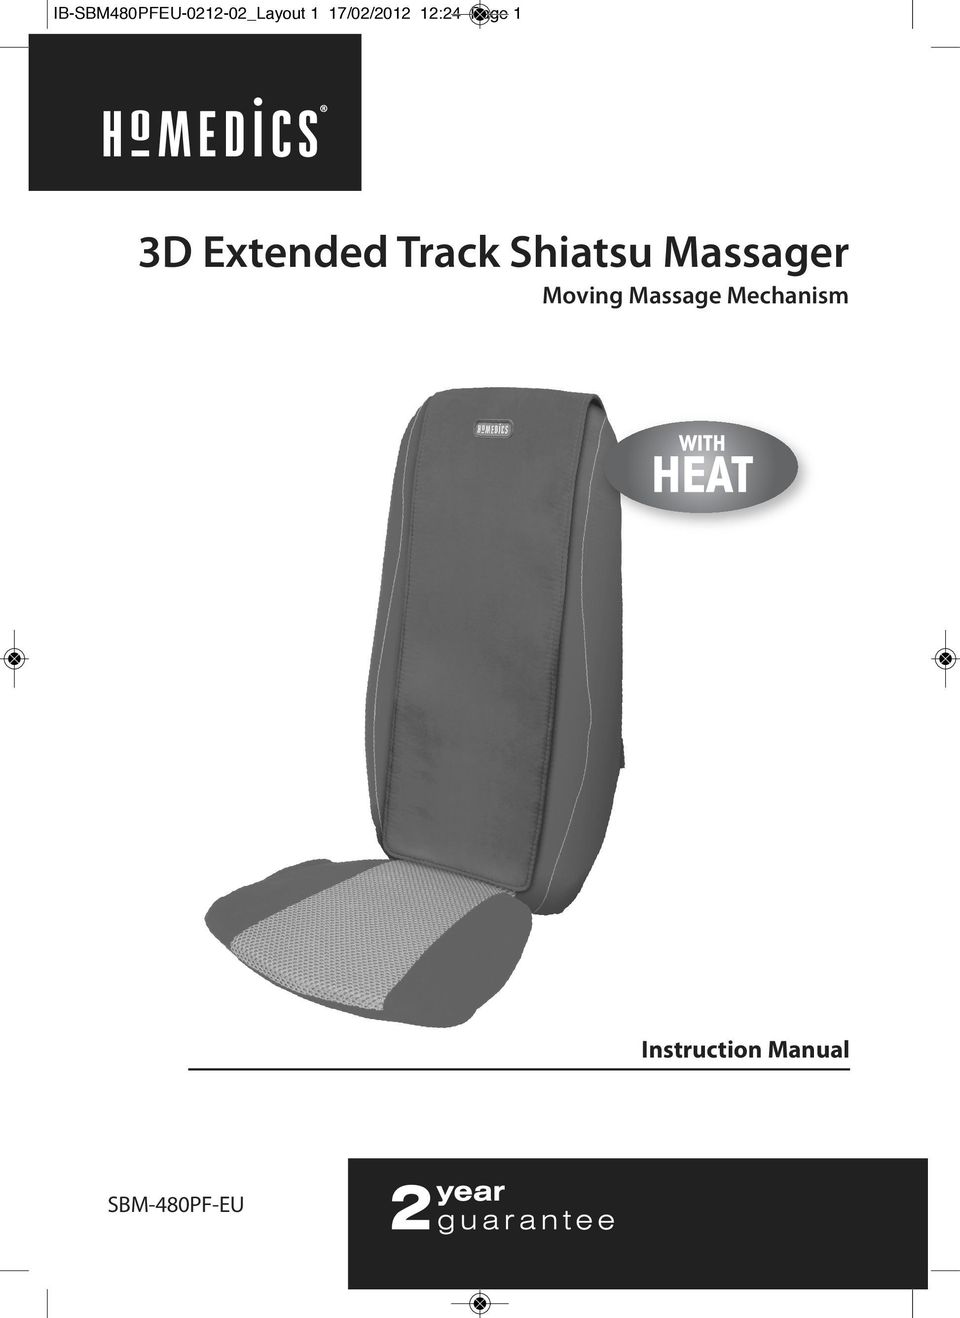 Track Shiatsu Massager Moving